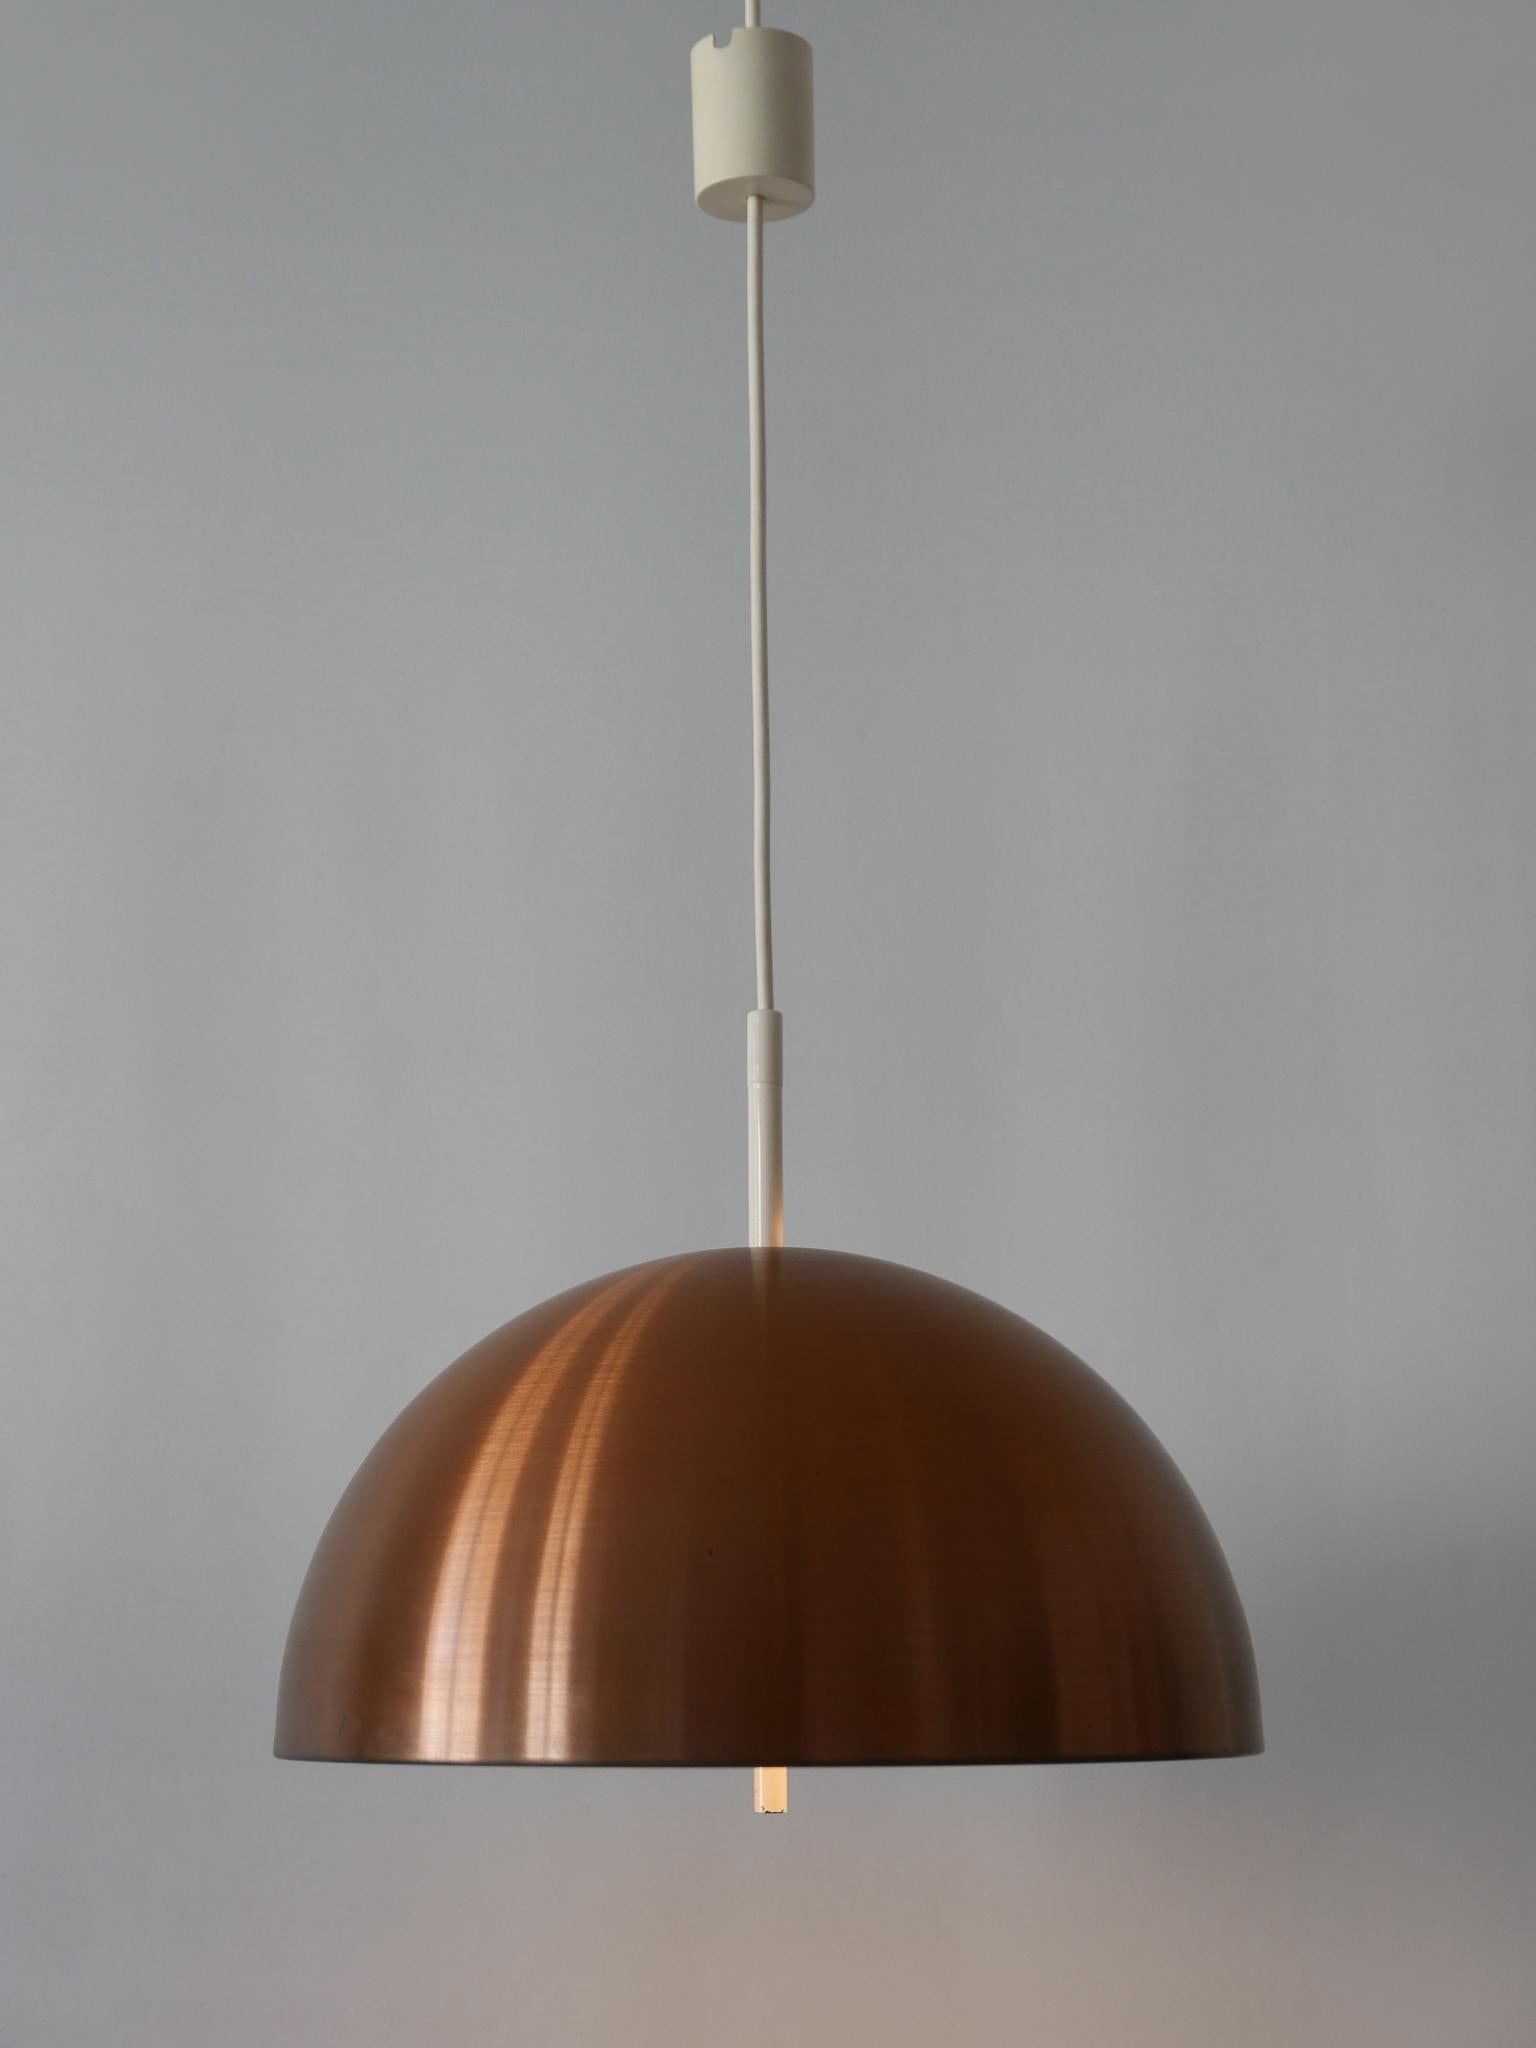 Elegant Mid-Century Modern Copper Pendant Lamp by Staff & Schwarz Germany, 1960s For Sale 3